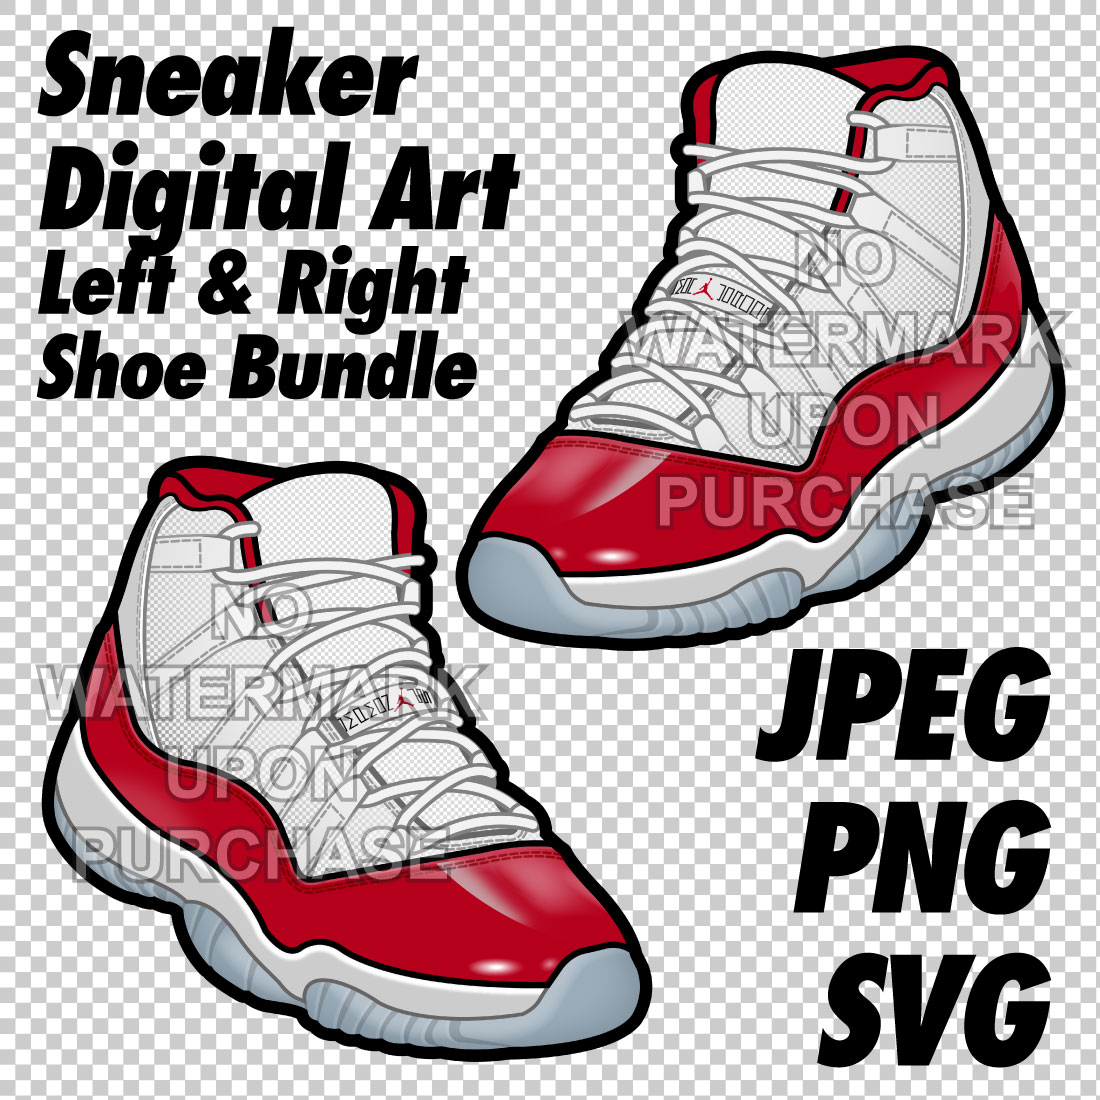 Air Jordan 11 Cherry JPEG PNG SVG Sneaker Art right & left shoe bundle cover image.